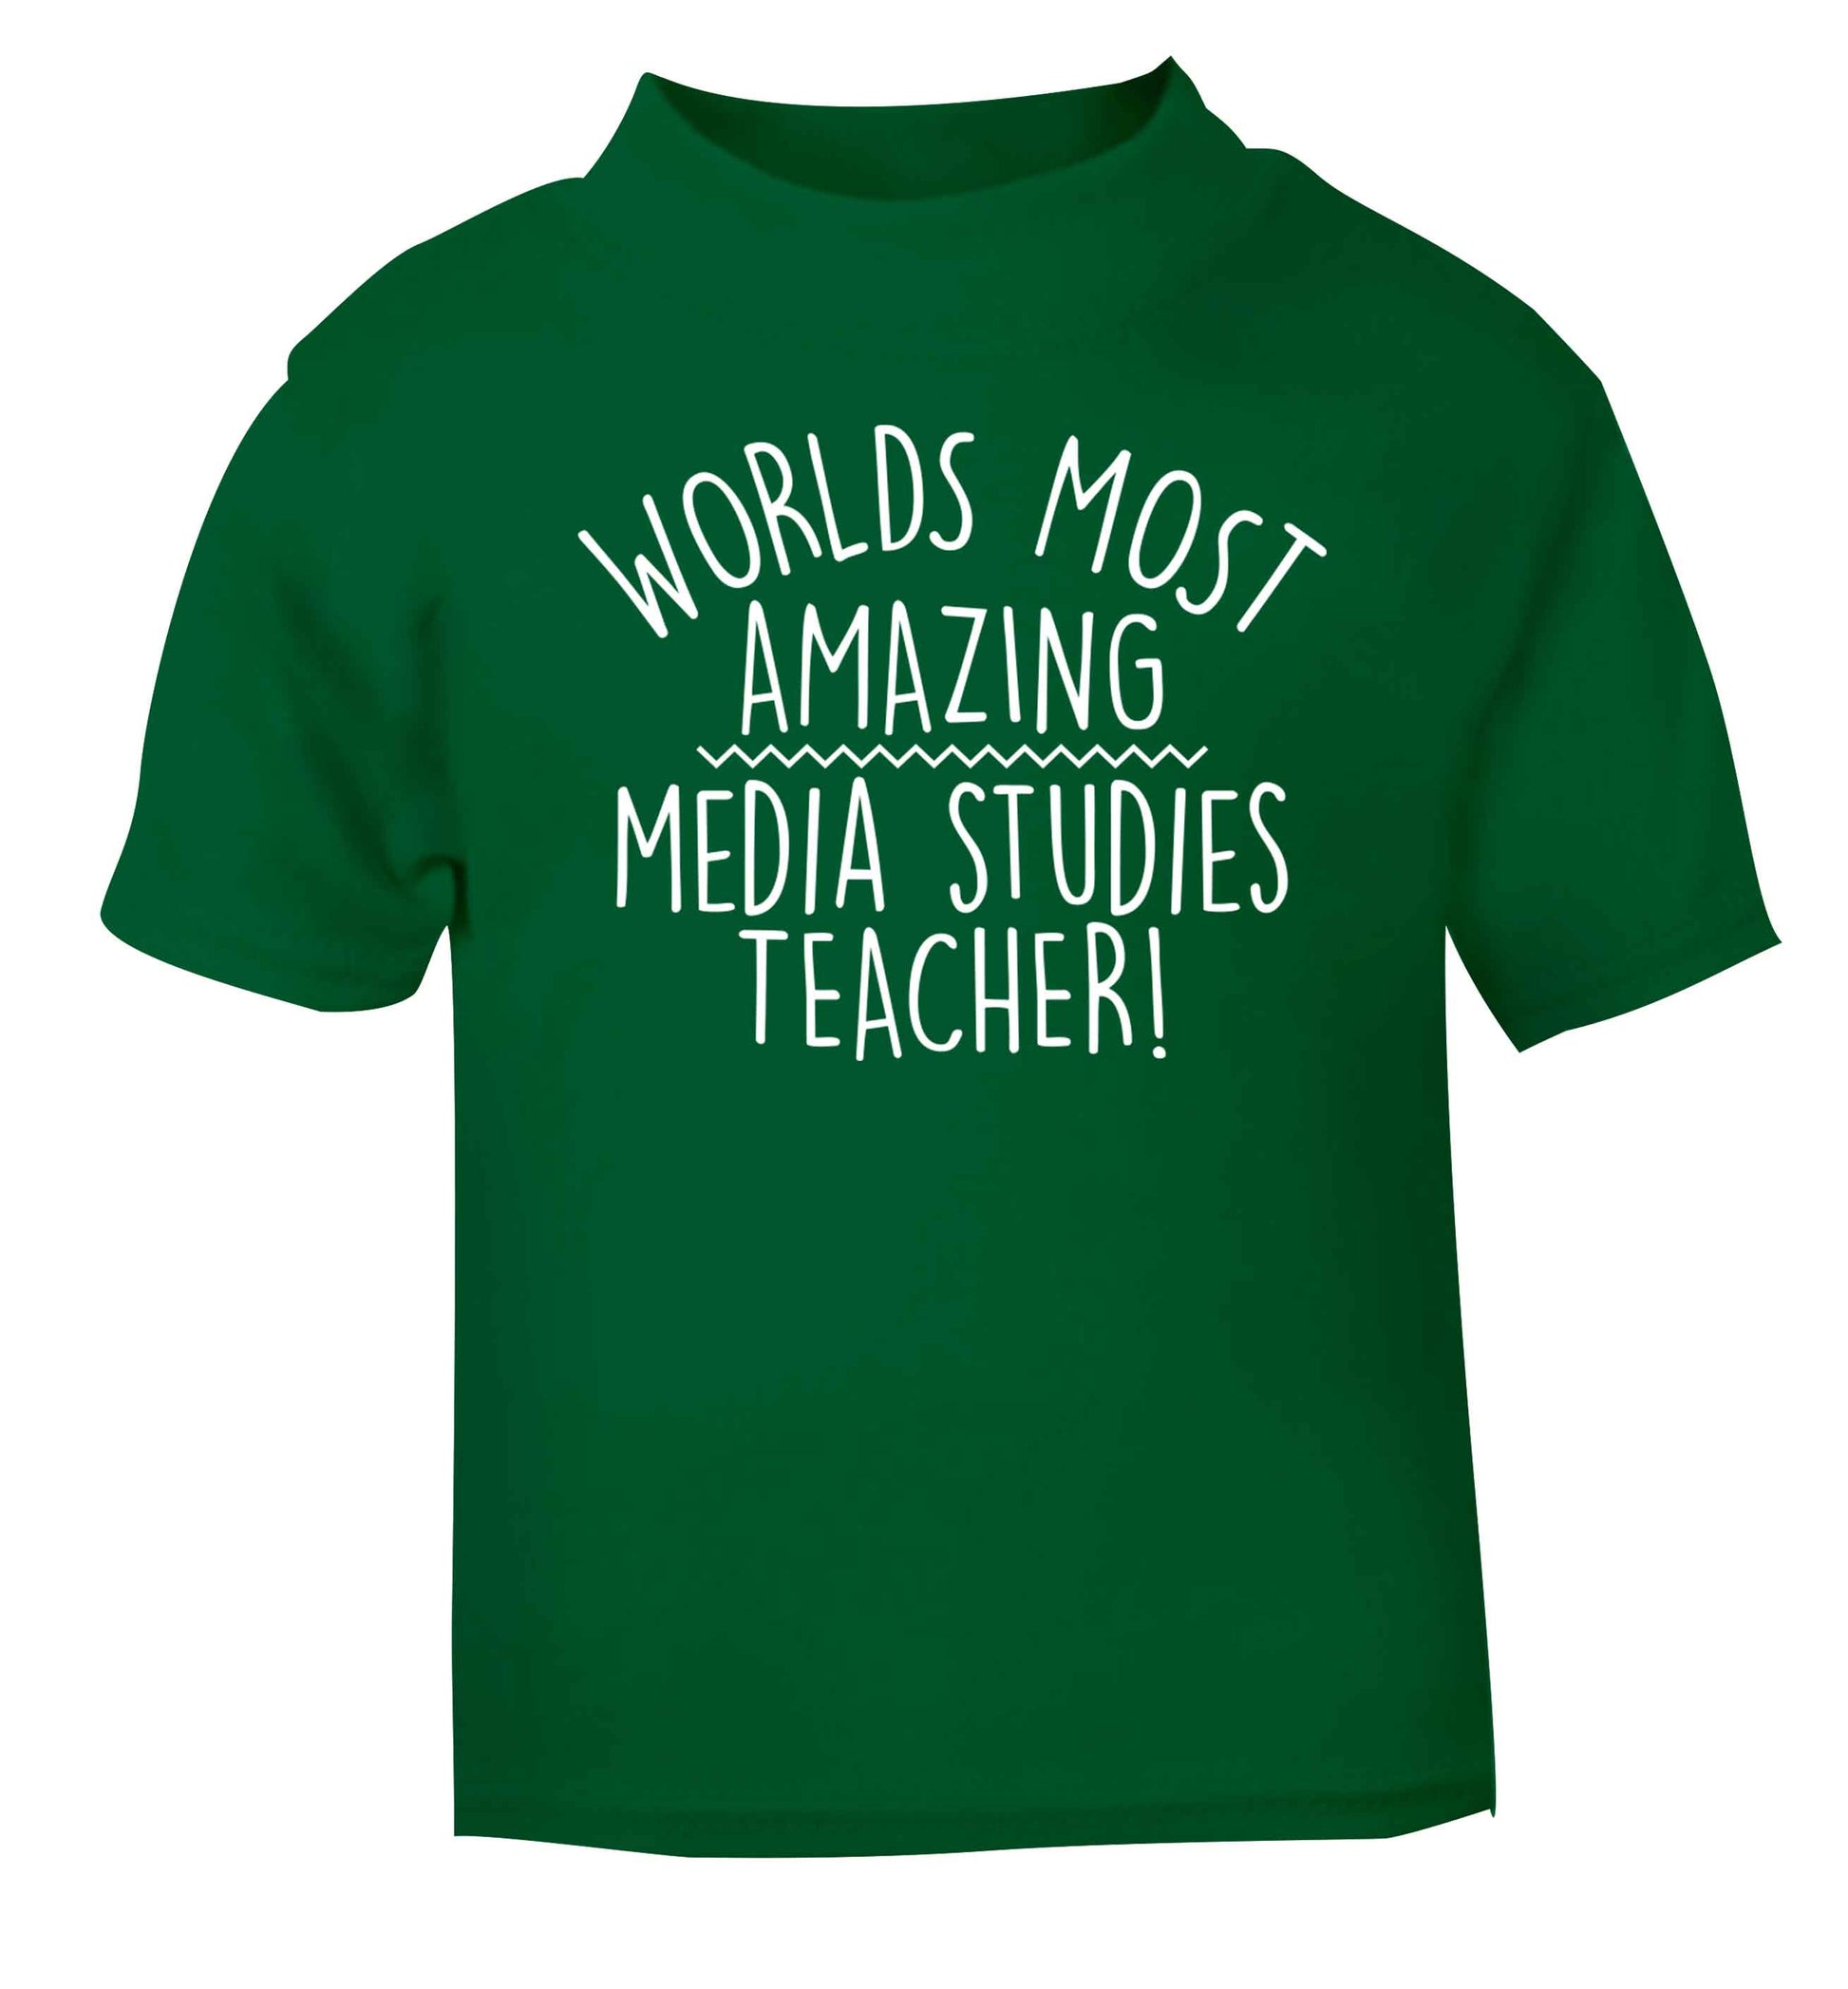 Worlds most amazing media studies teacher green baby toddler Tshirt 2 Years